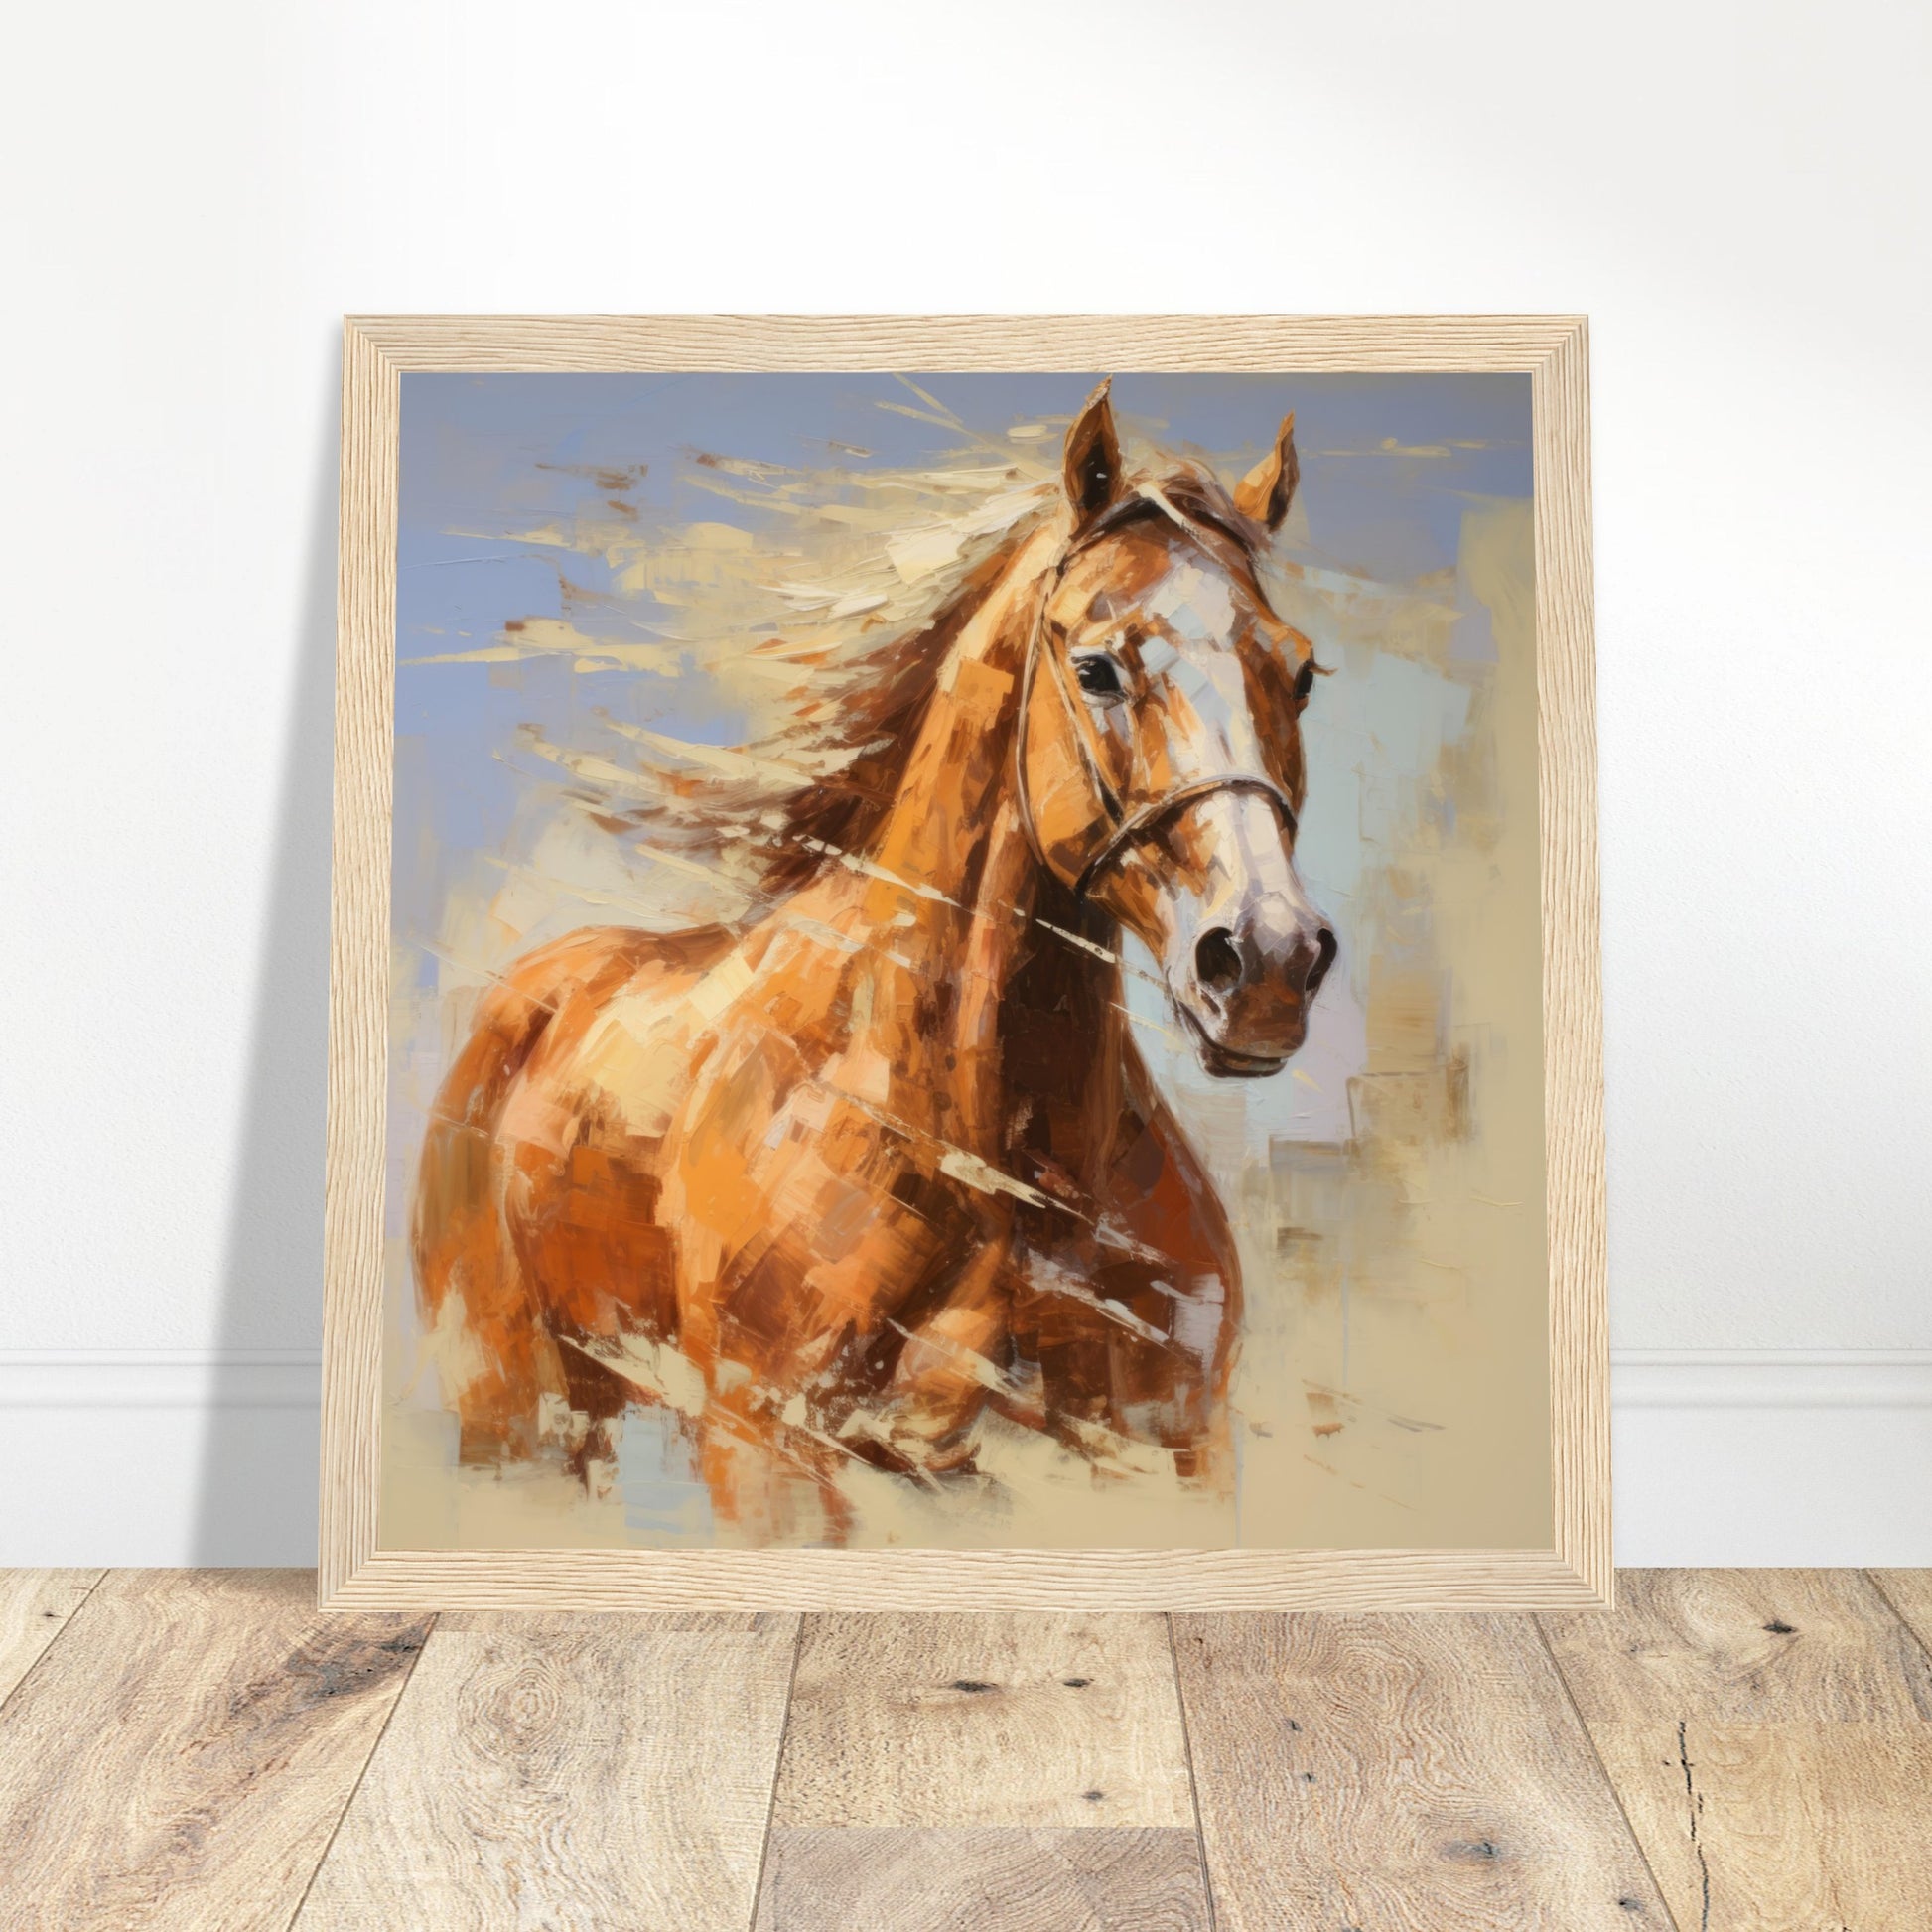 Equine Beauty #06 - Print Room Ltd Dark wood frame 30x30 cm / 12x12"